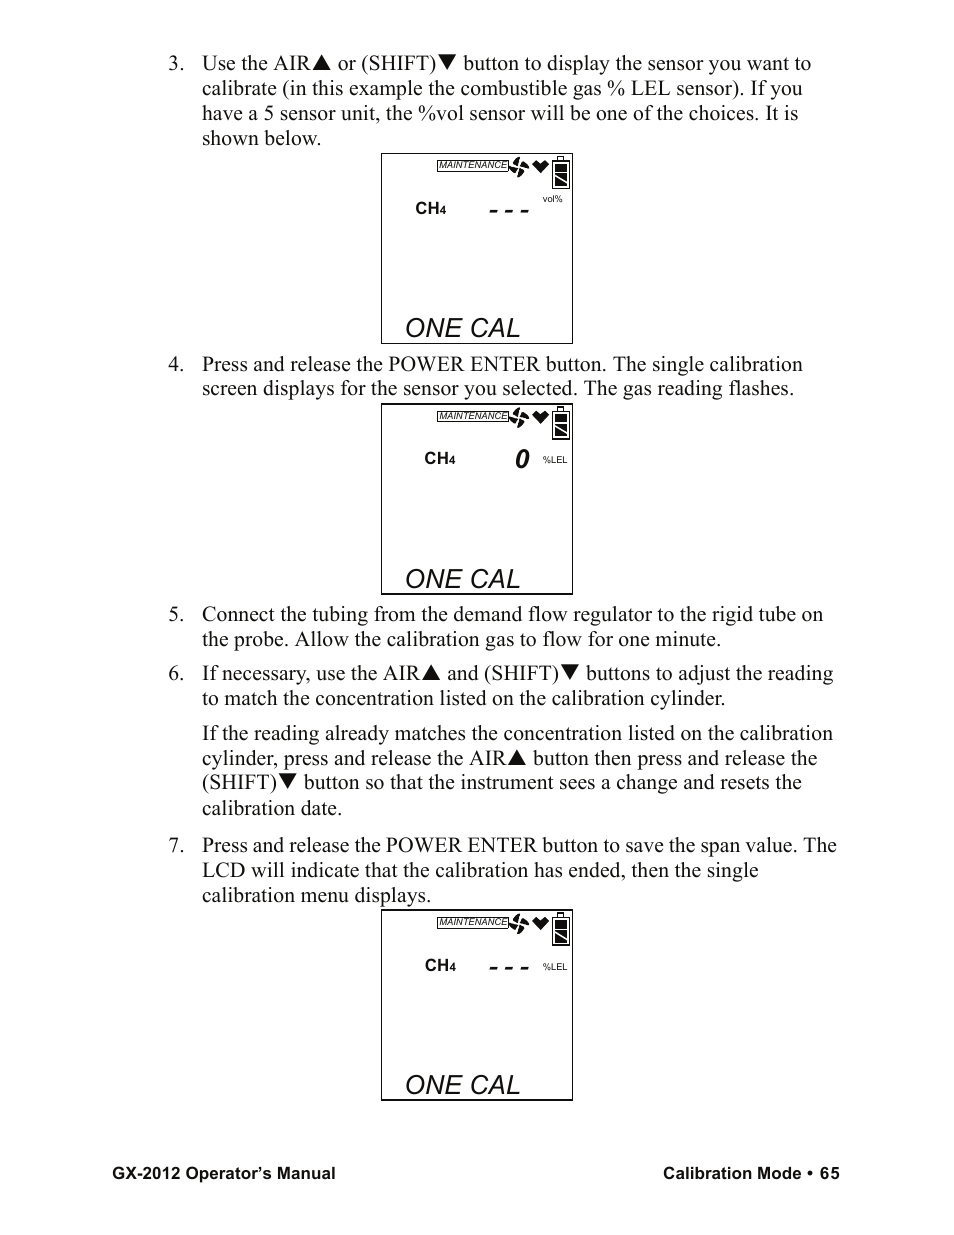 One cal | RKI Instruments GX-2012 Manual User Manual | Page 73 / 185